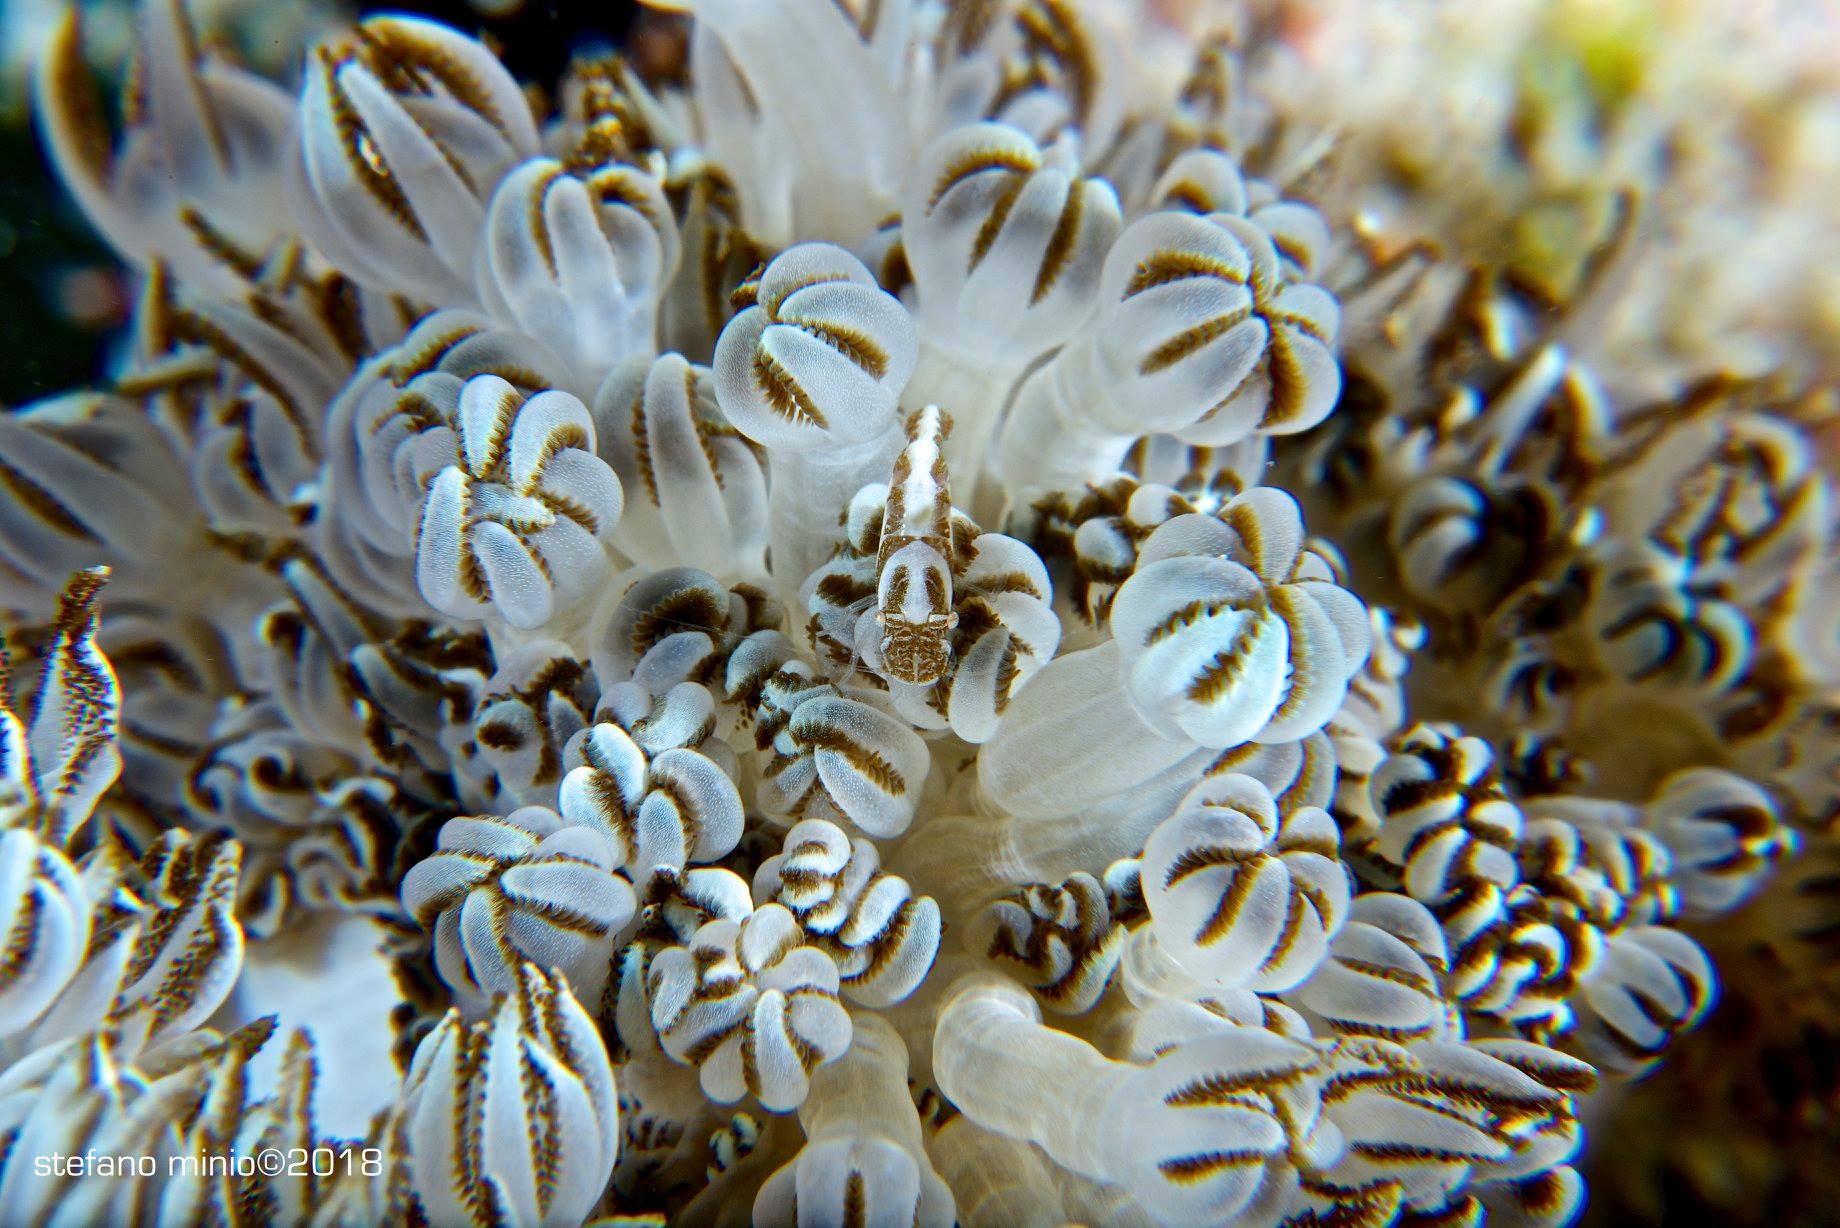 Halmahera's anemone shrimp